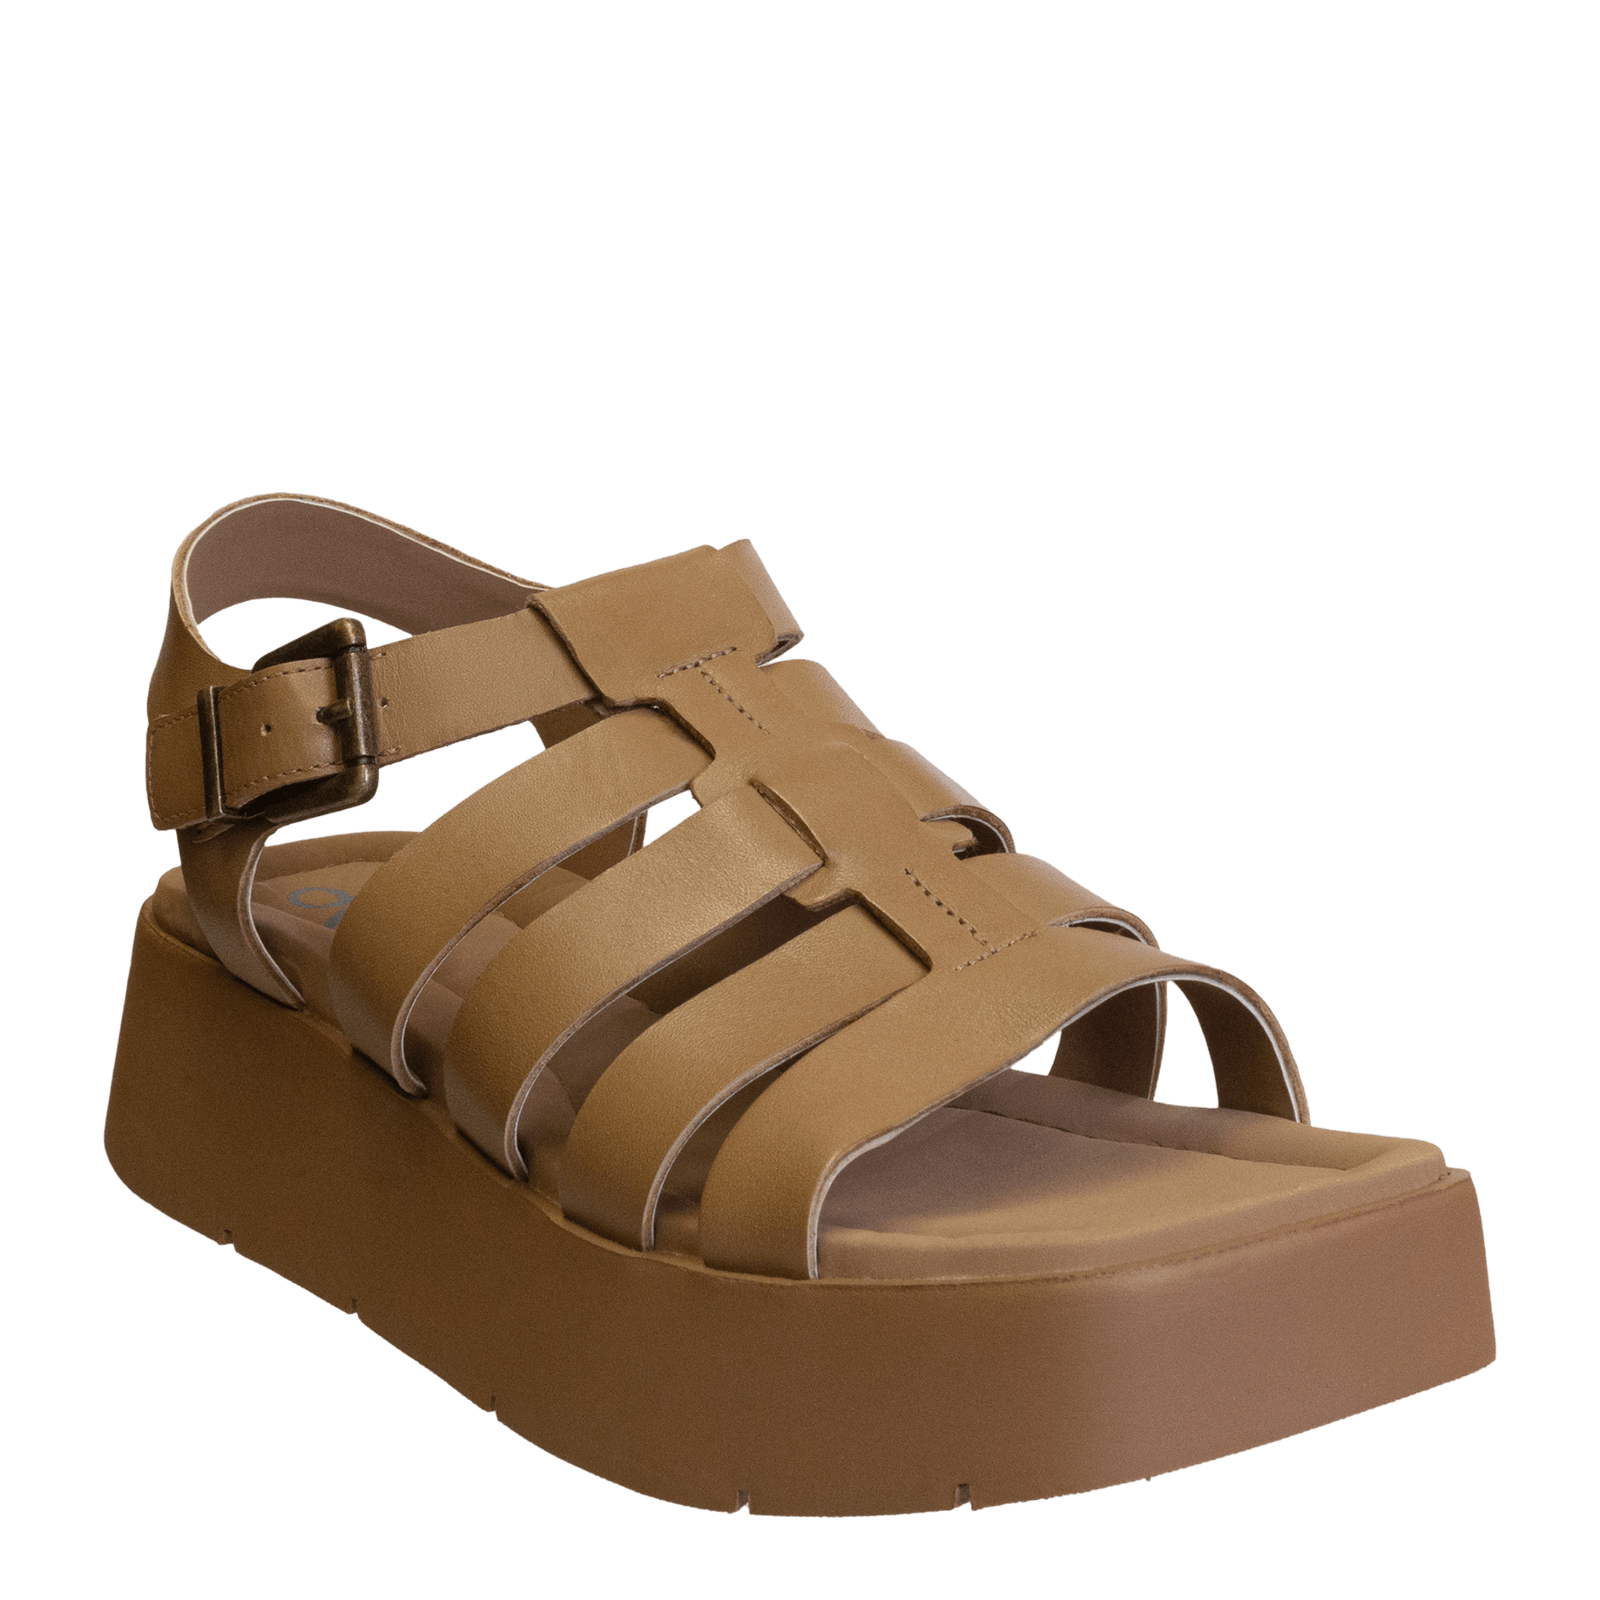 Shop Women's Flat Sandals